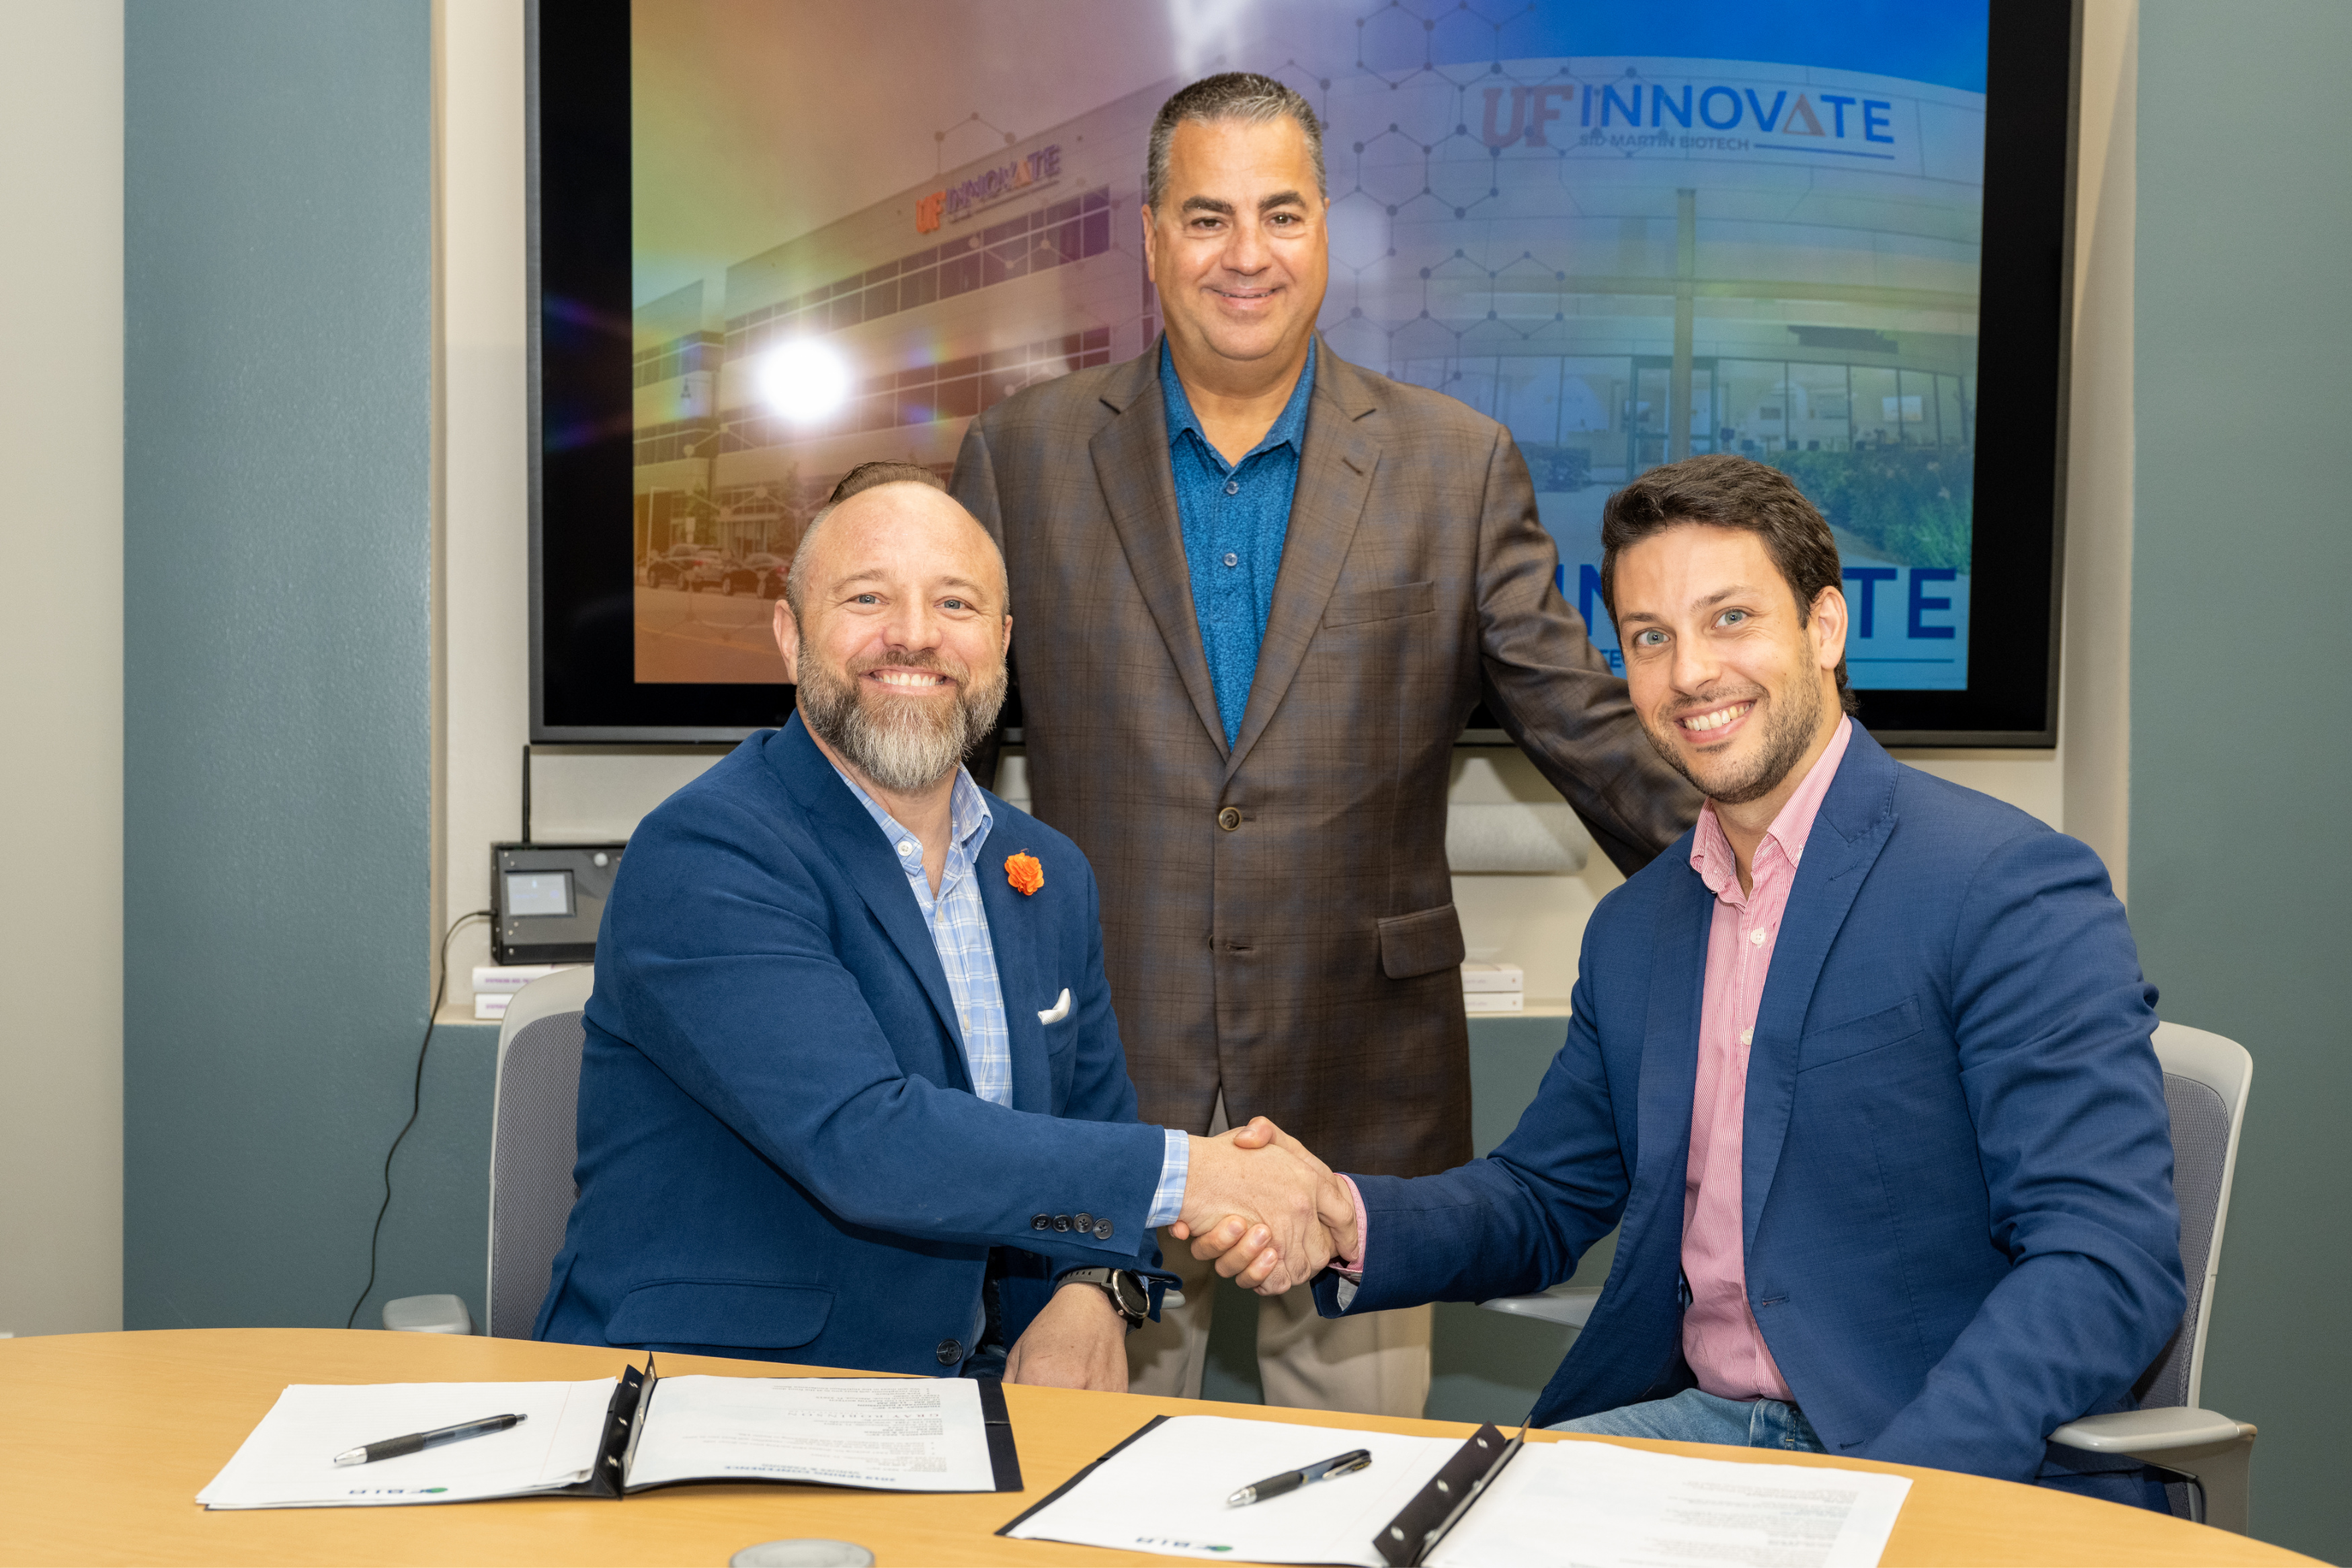 SATLANTIS’ and AgIntel’s team signing Memorandum of Understanding. From left, Matt Donovan of Agriculture Intelligence, Karl LaPan of UF Innovate | Accelerate, and Aitor Moriñigo of SATLANTIS.